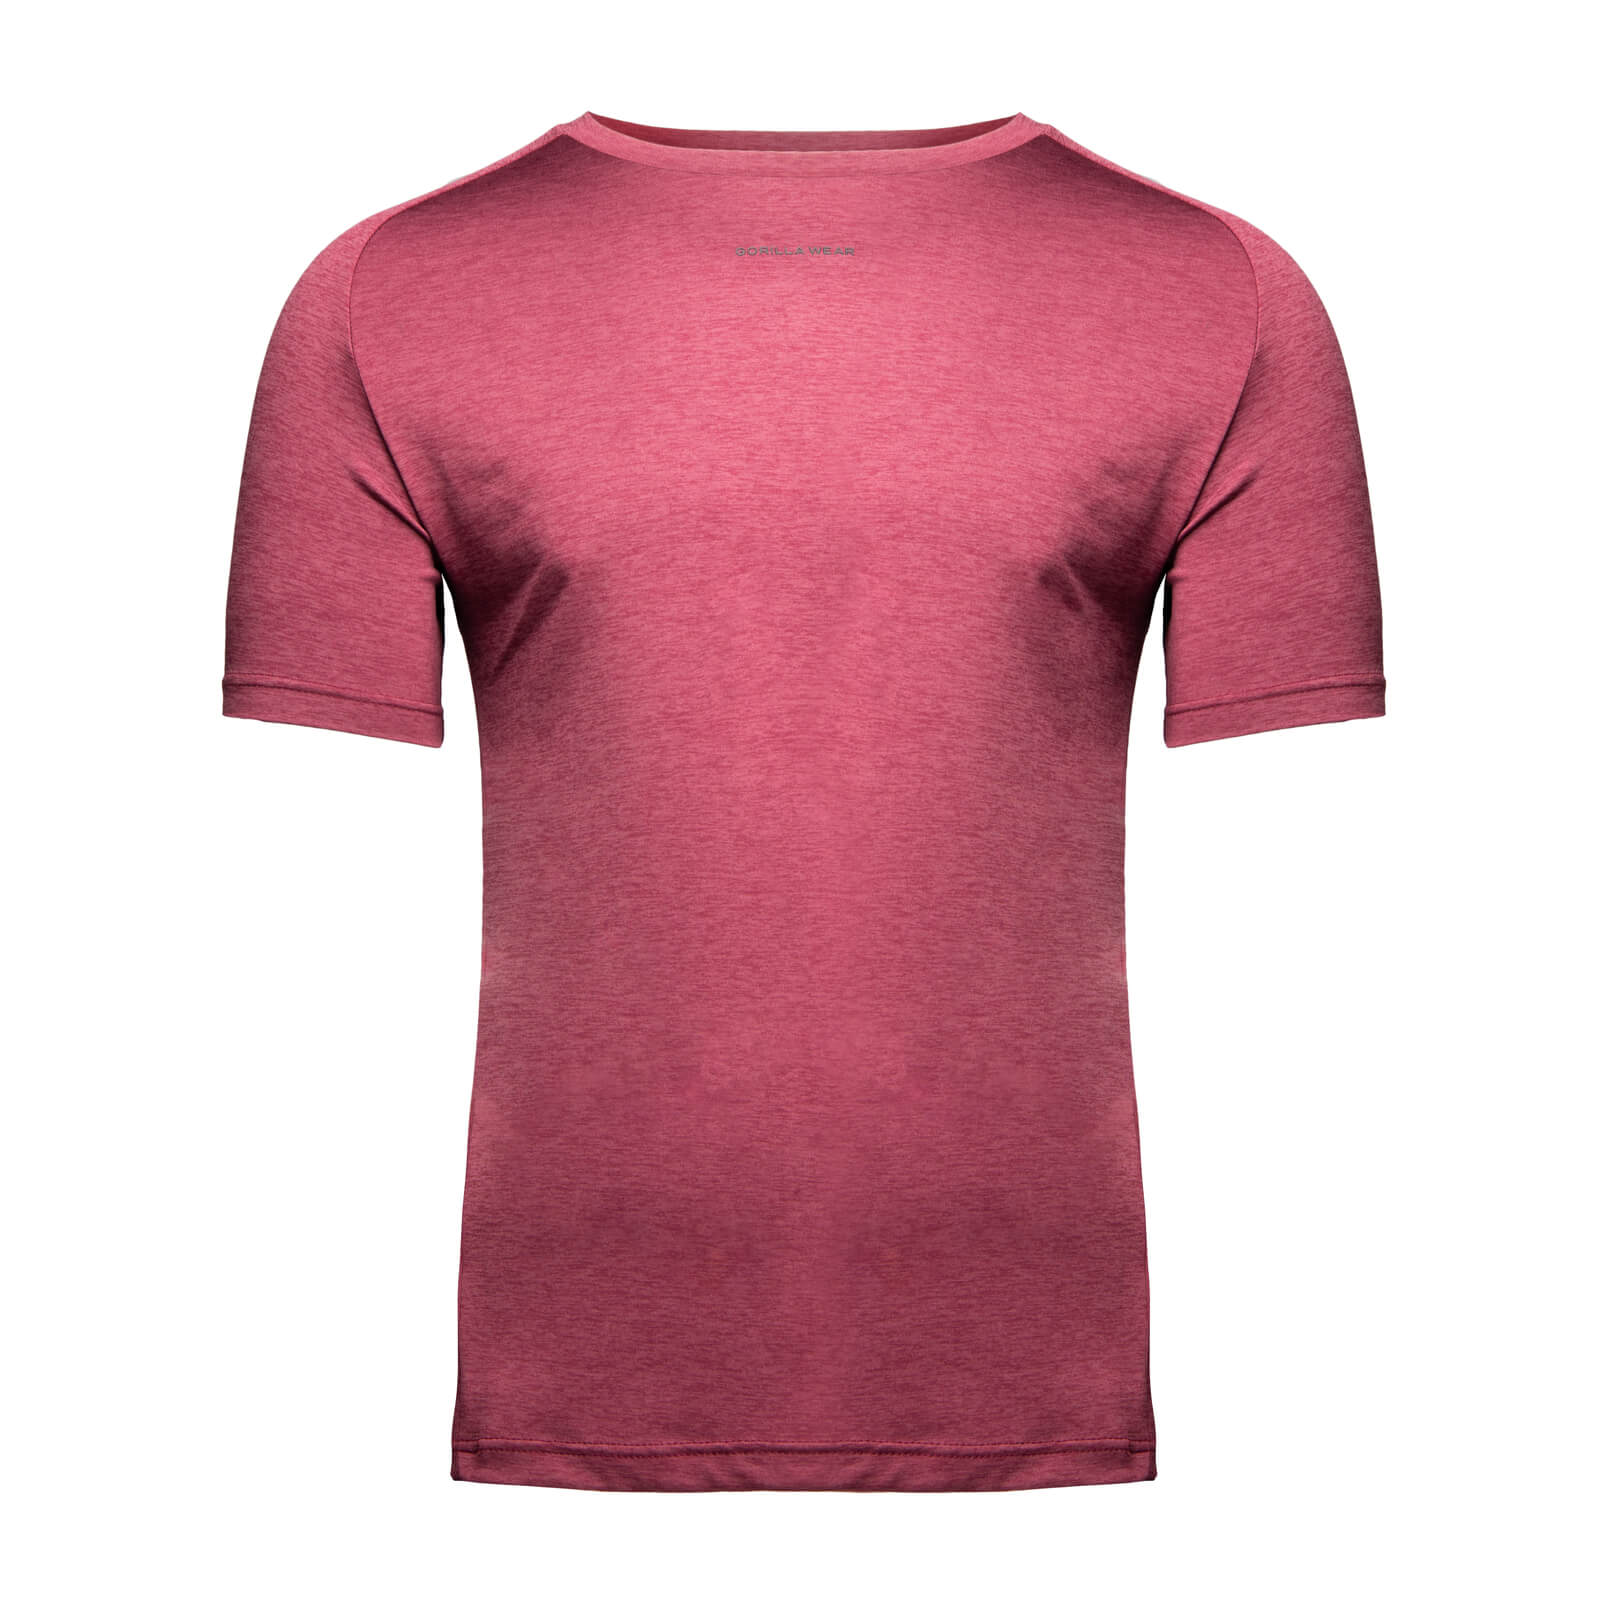 Sjekke Taos T-Shirt, burgundy red, Gorilla Wear hos SportGymButikken.no